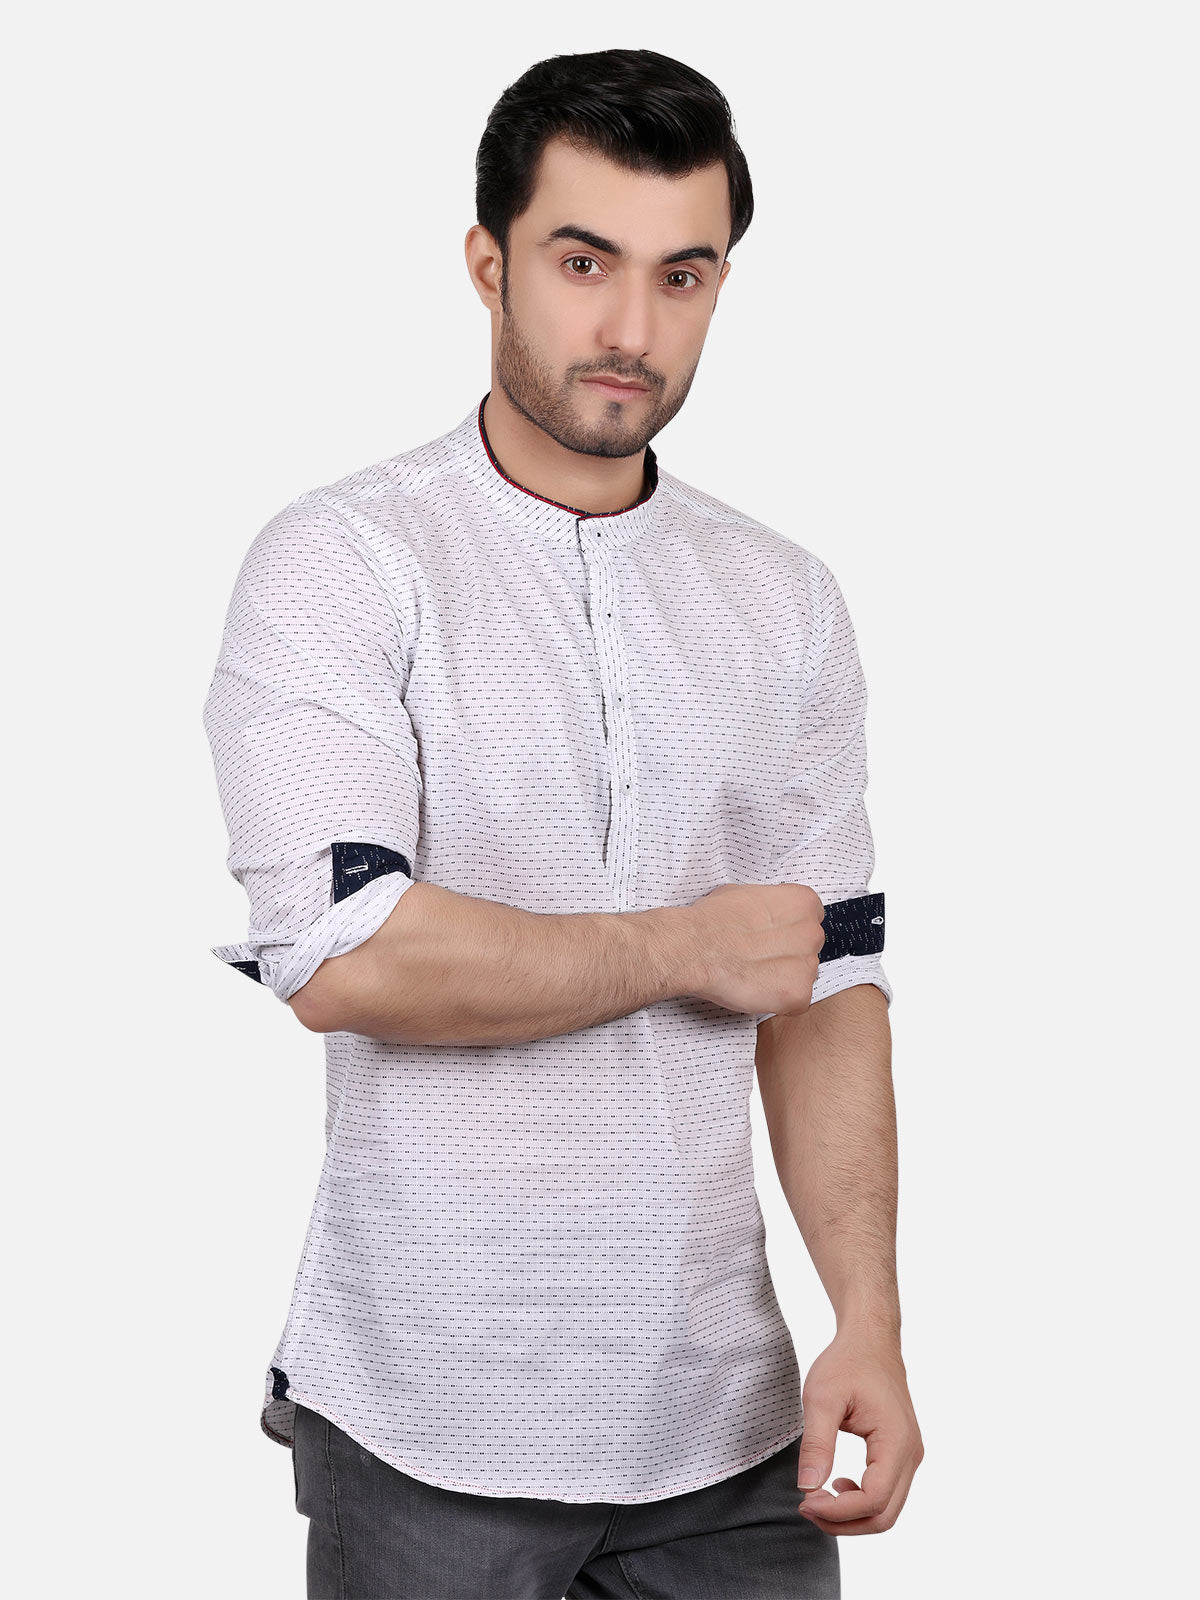 Men's White Casual Shirt - FMTS18-31202